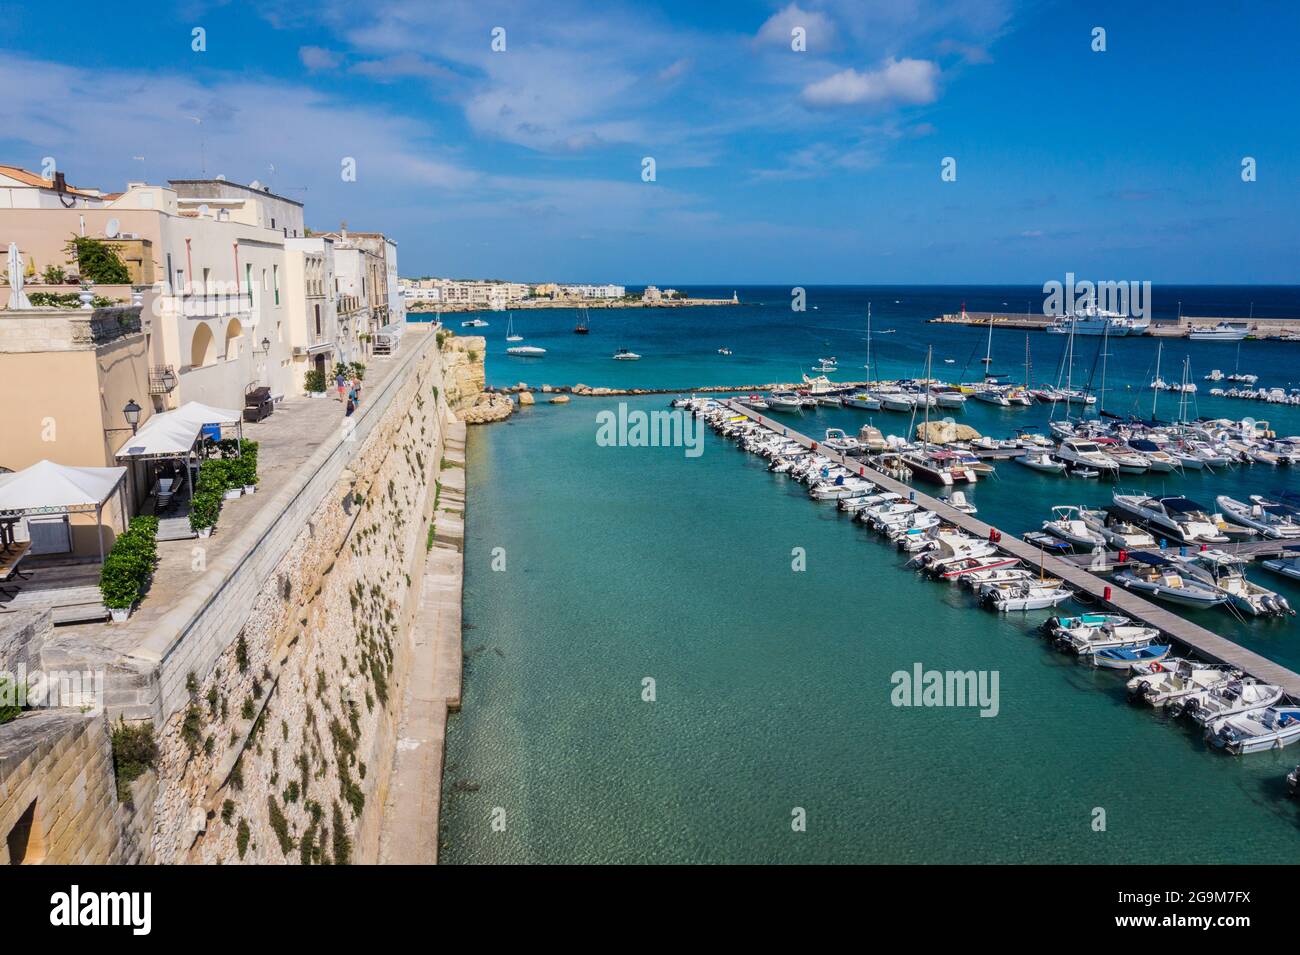 Harbor and old town of Otranto, Salento, Apulia region, Italy Stock Photo